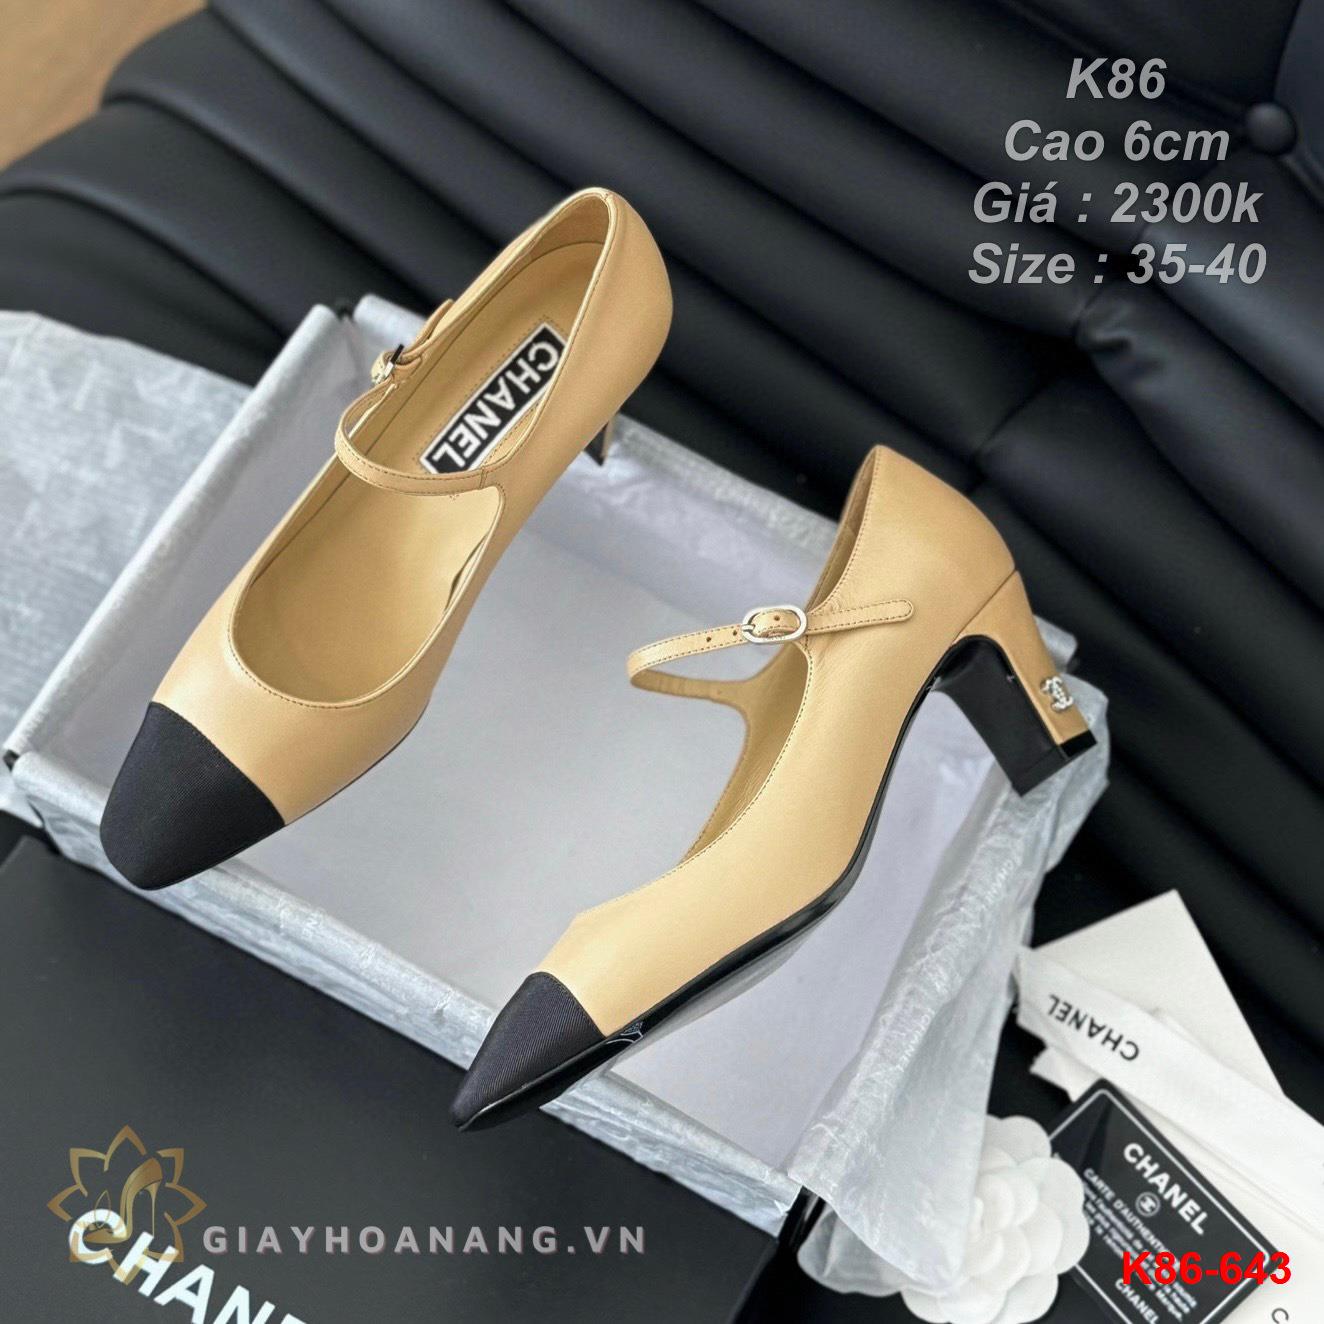 K86-643 Chanel giày cao gót 6cm siêu cấp